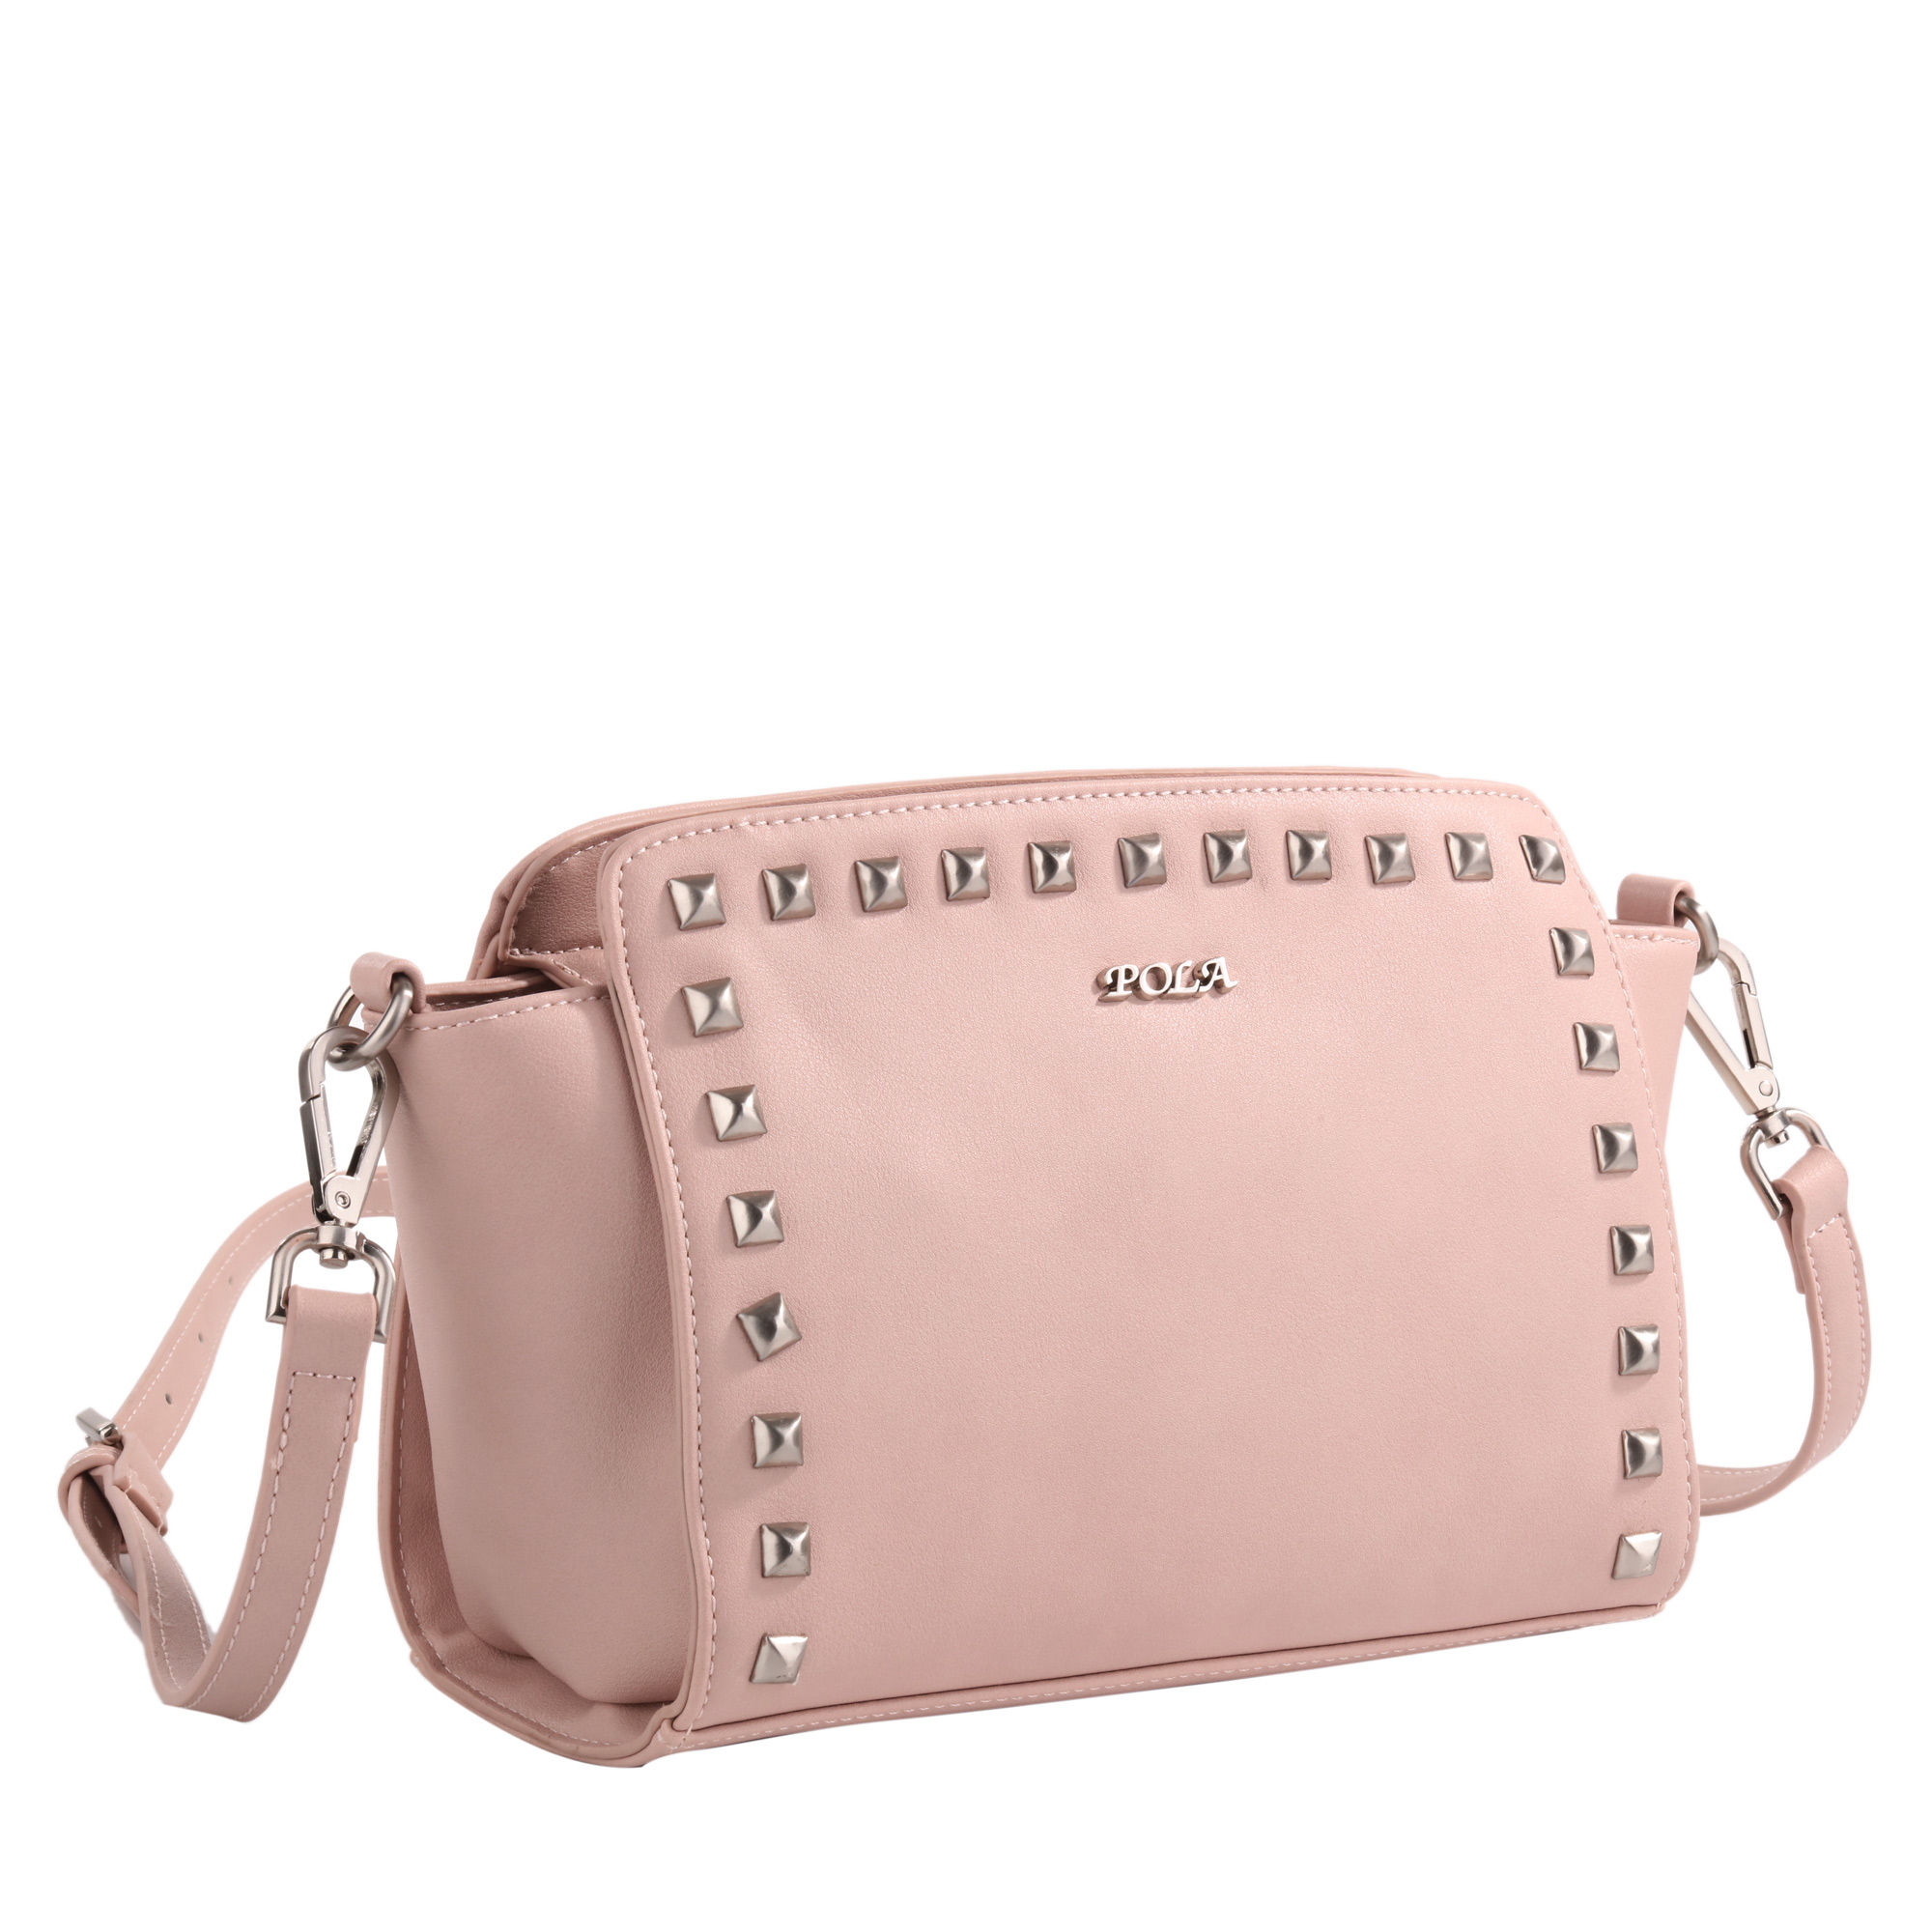 Розовая сумка через плечо. Сумка Pola женская. Сумка Pola 18228 розовый. Бледно розовая сумка.